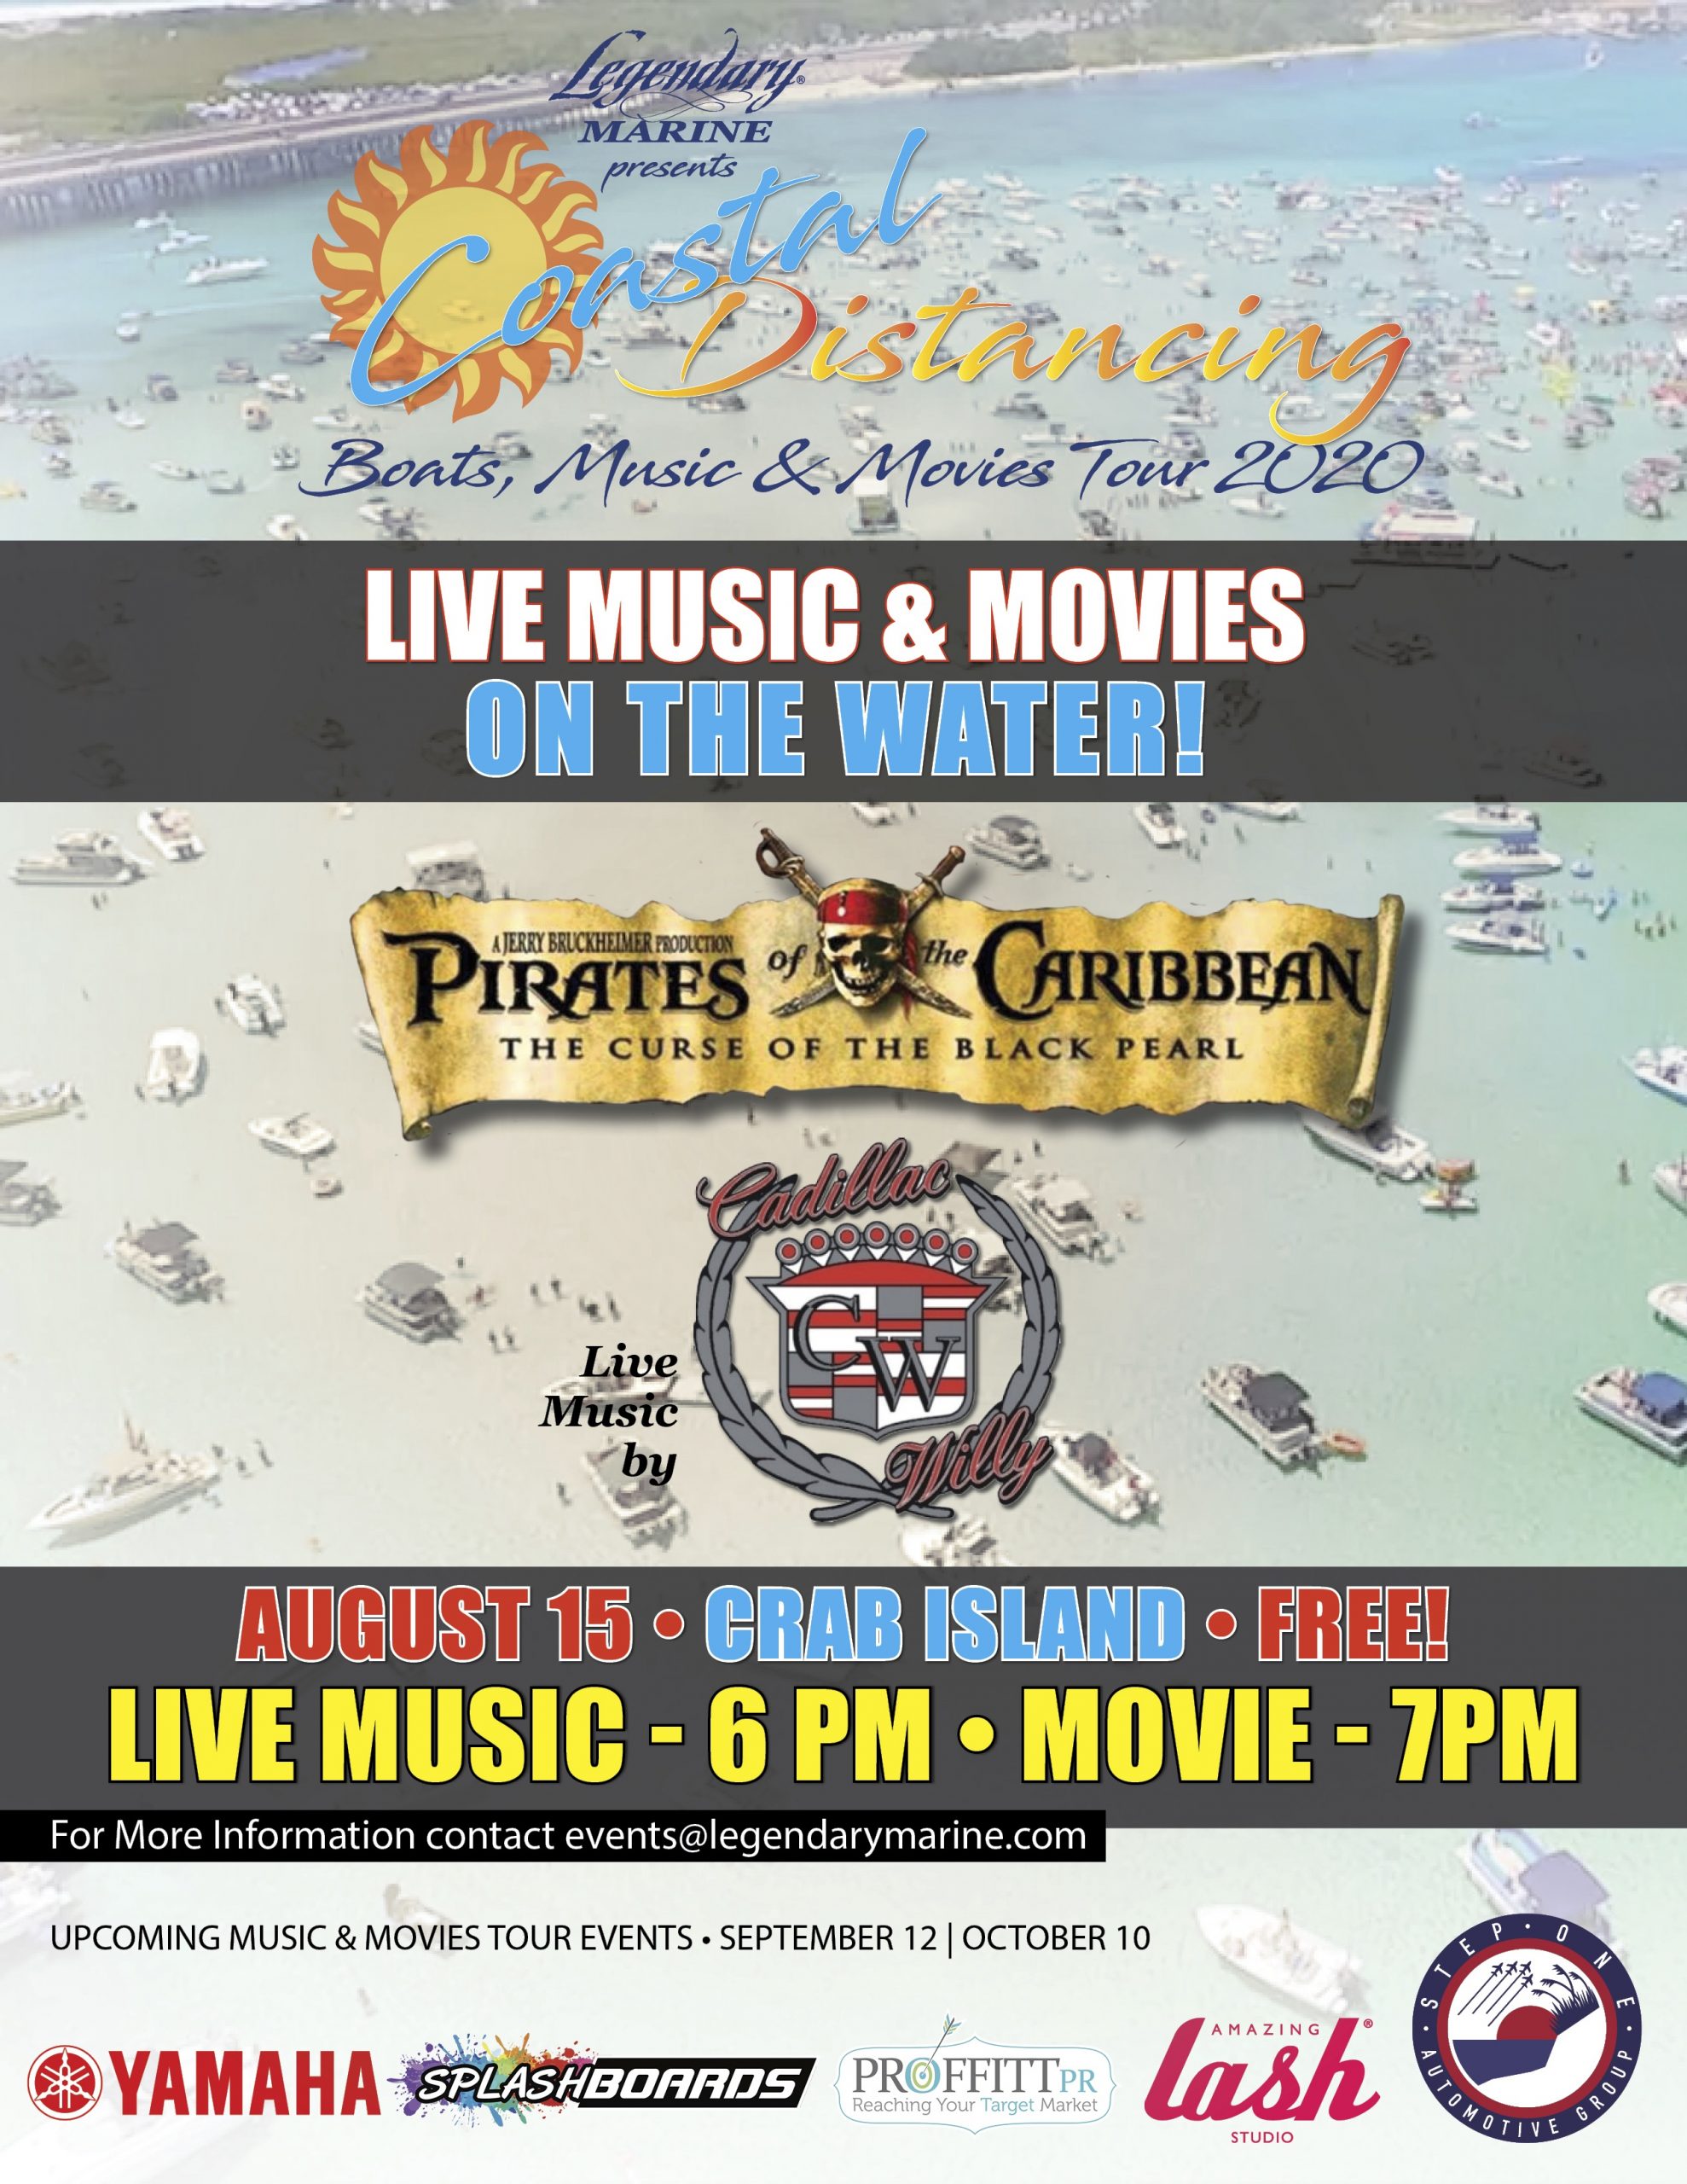 Legendary Marine Presents Coastal Distancing Entertainment Tour